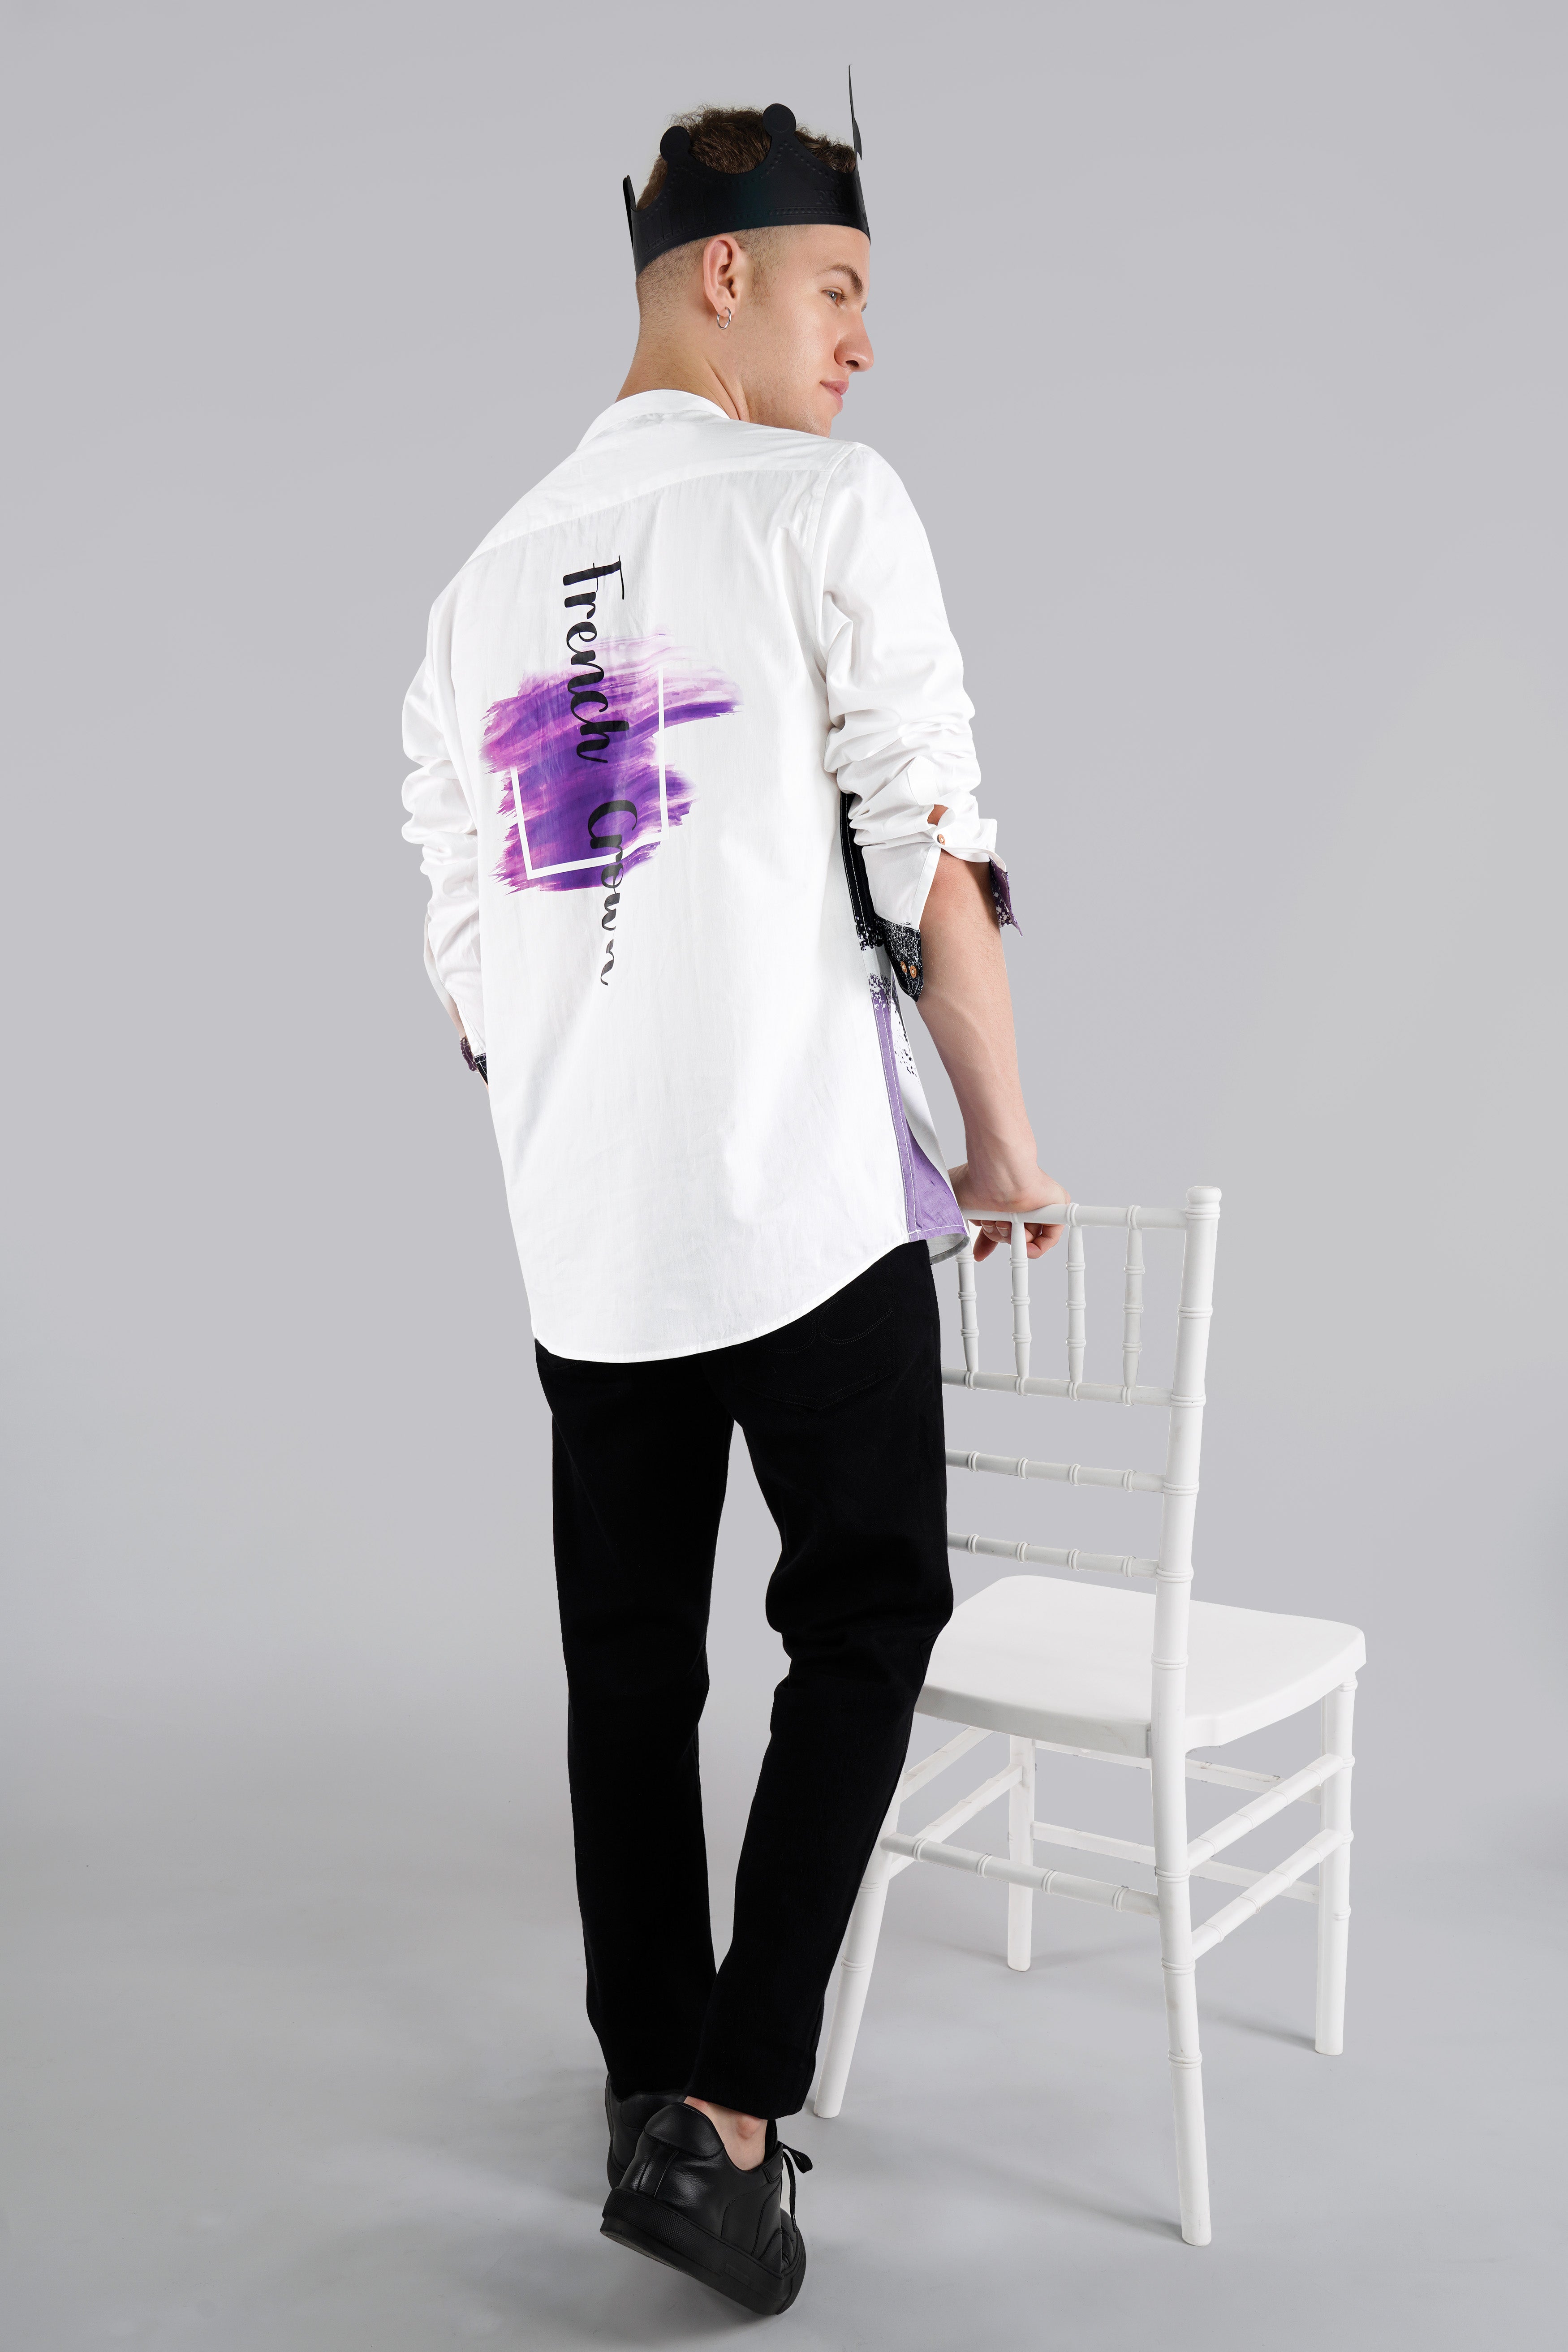 Bright White with Funky Printed French Crown Premium Cotton Designer Kurta Shirt